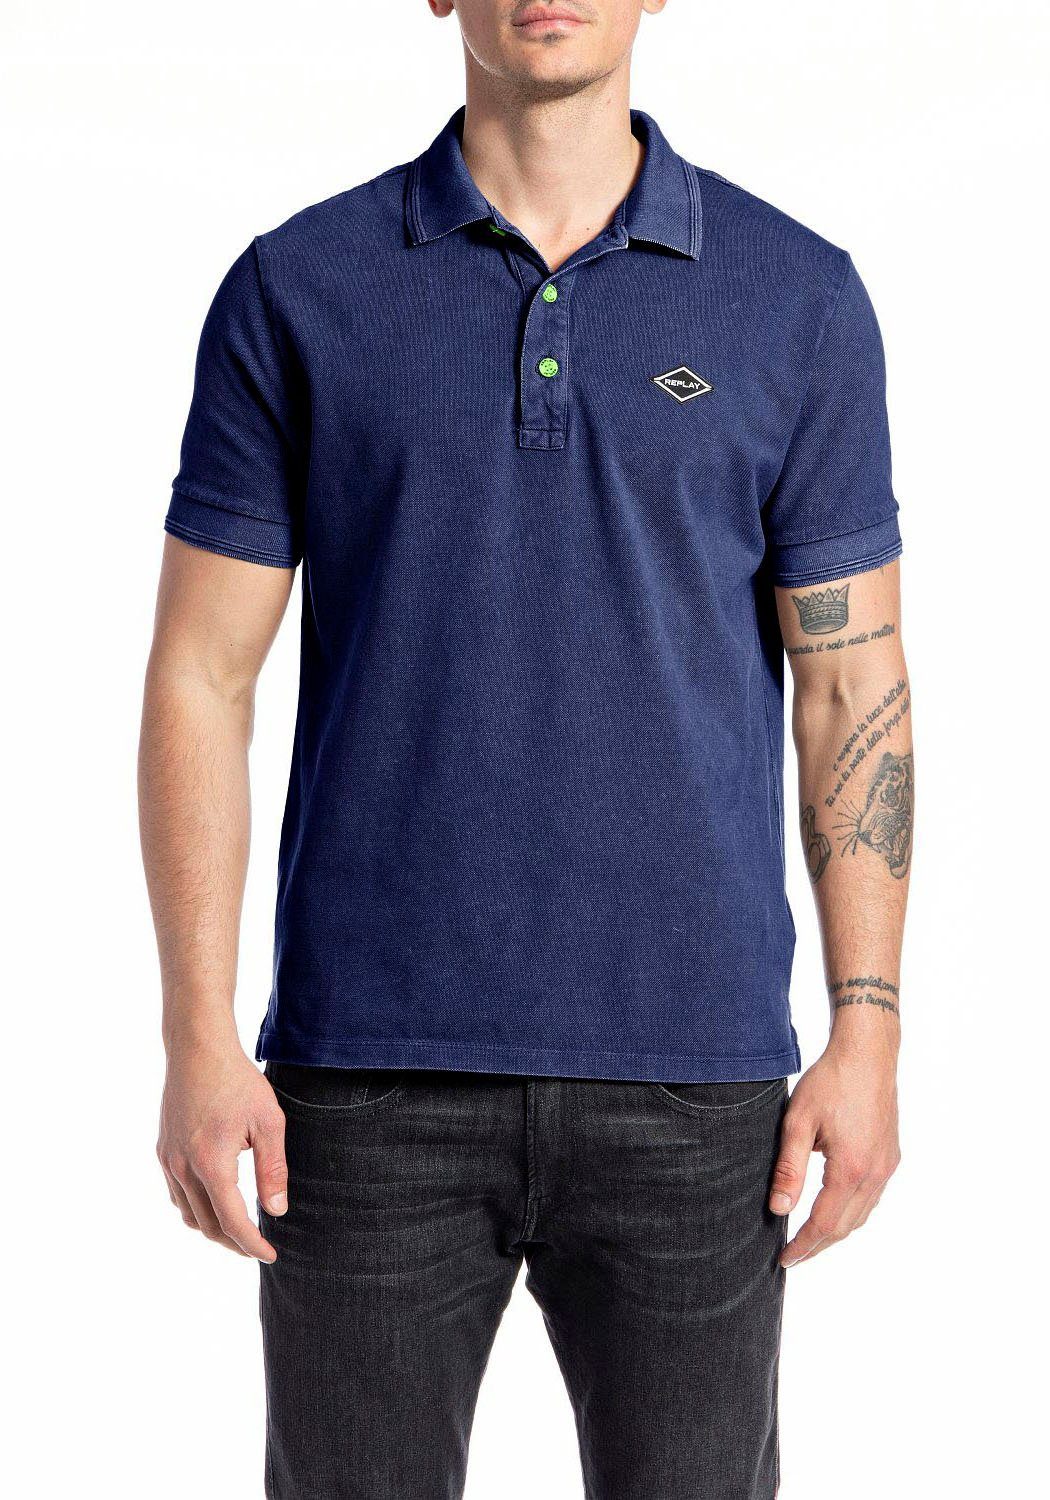 Replay Poloshirt navy blue | Poloshirts